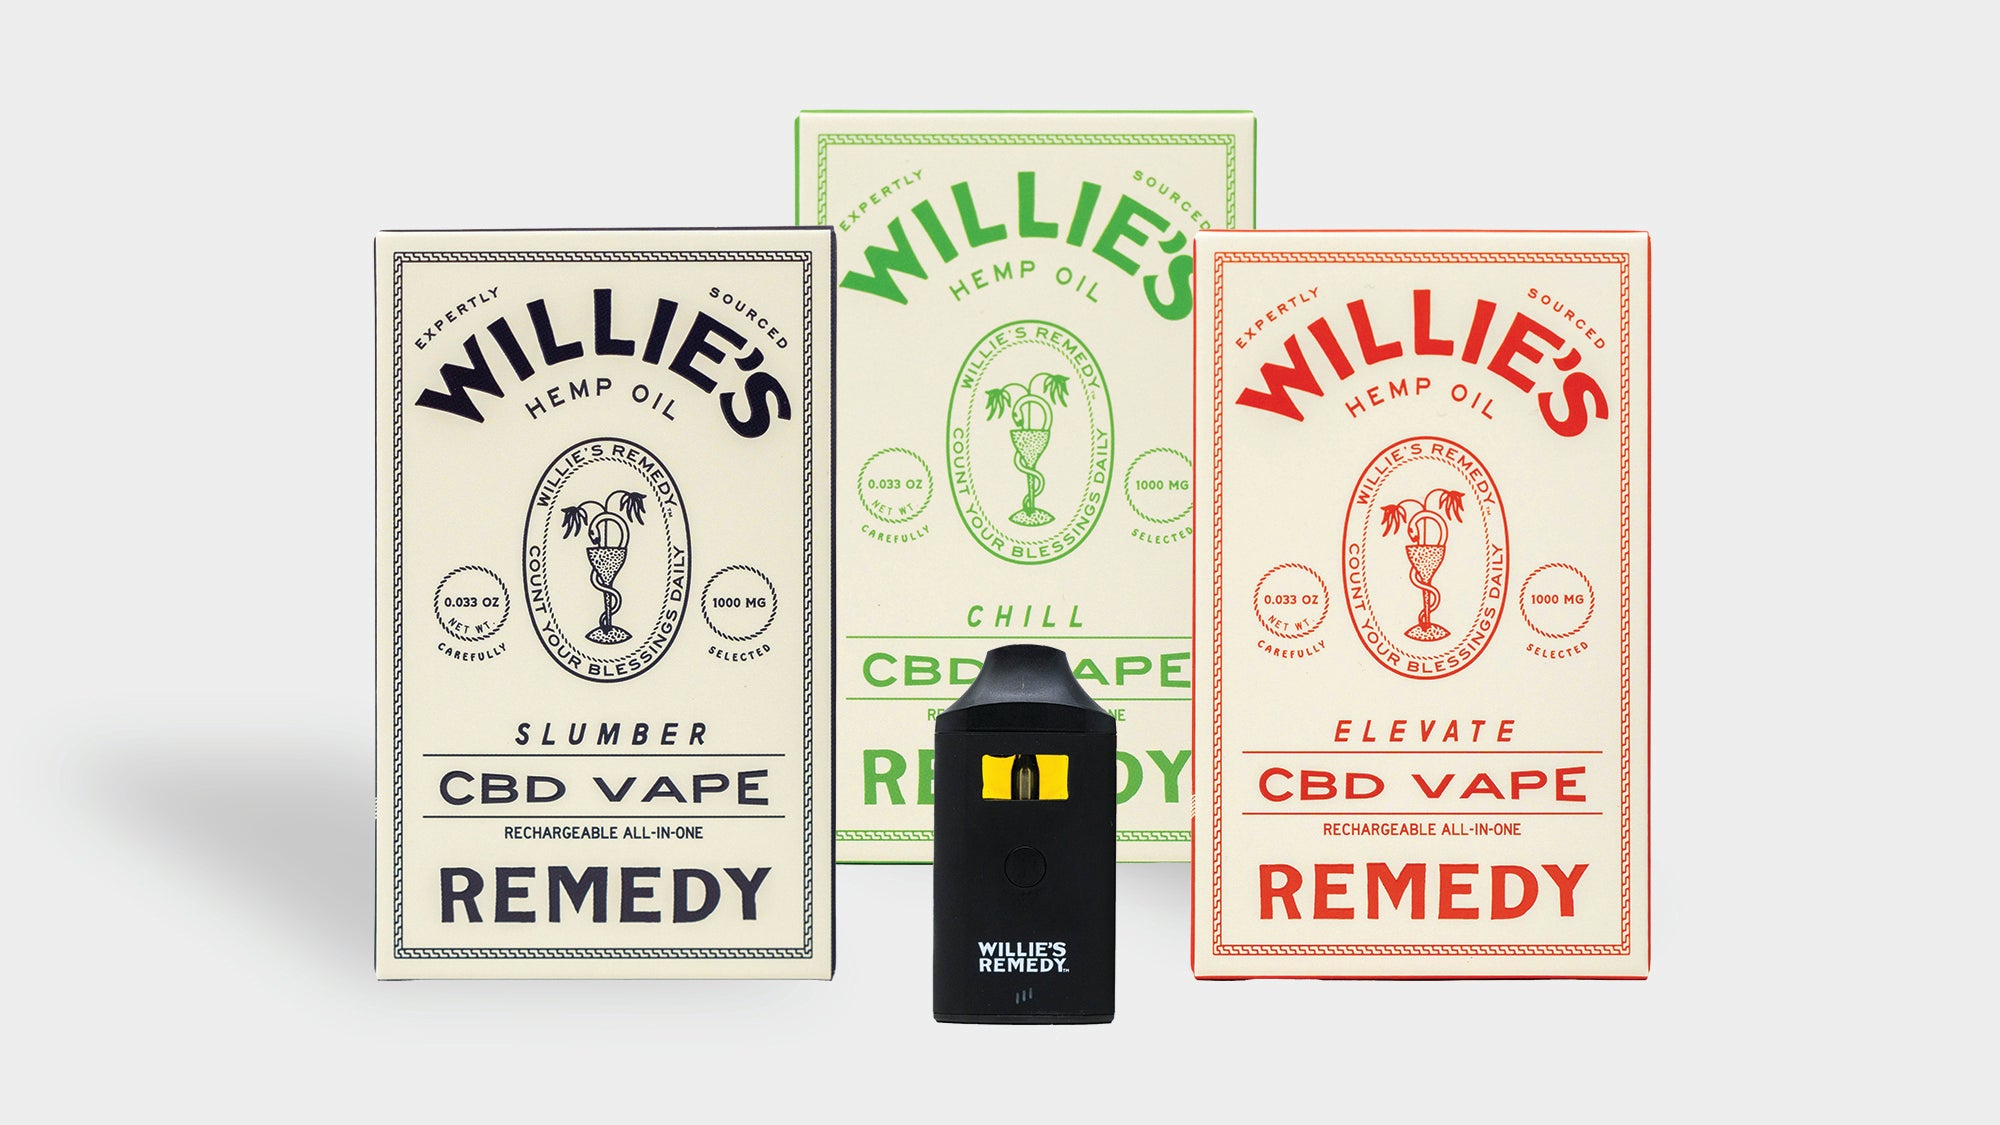 Willie’s Remedy™ Vapes